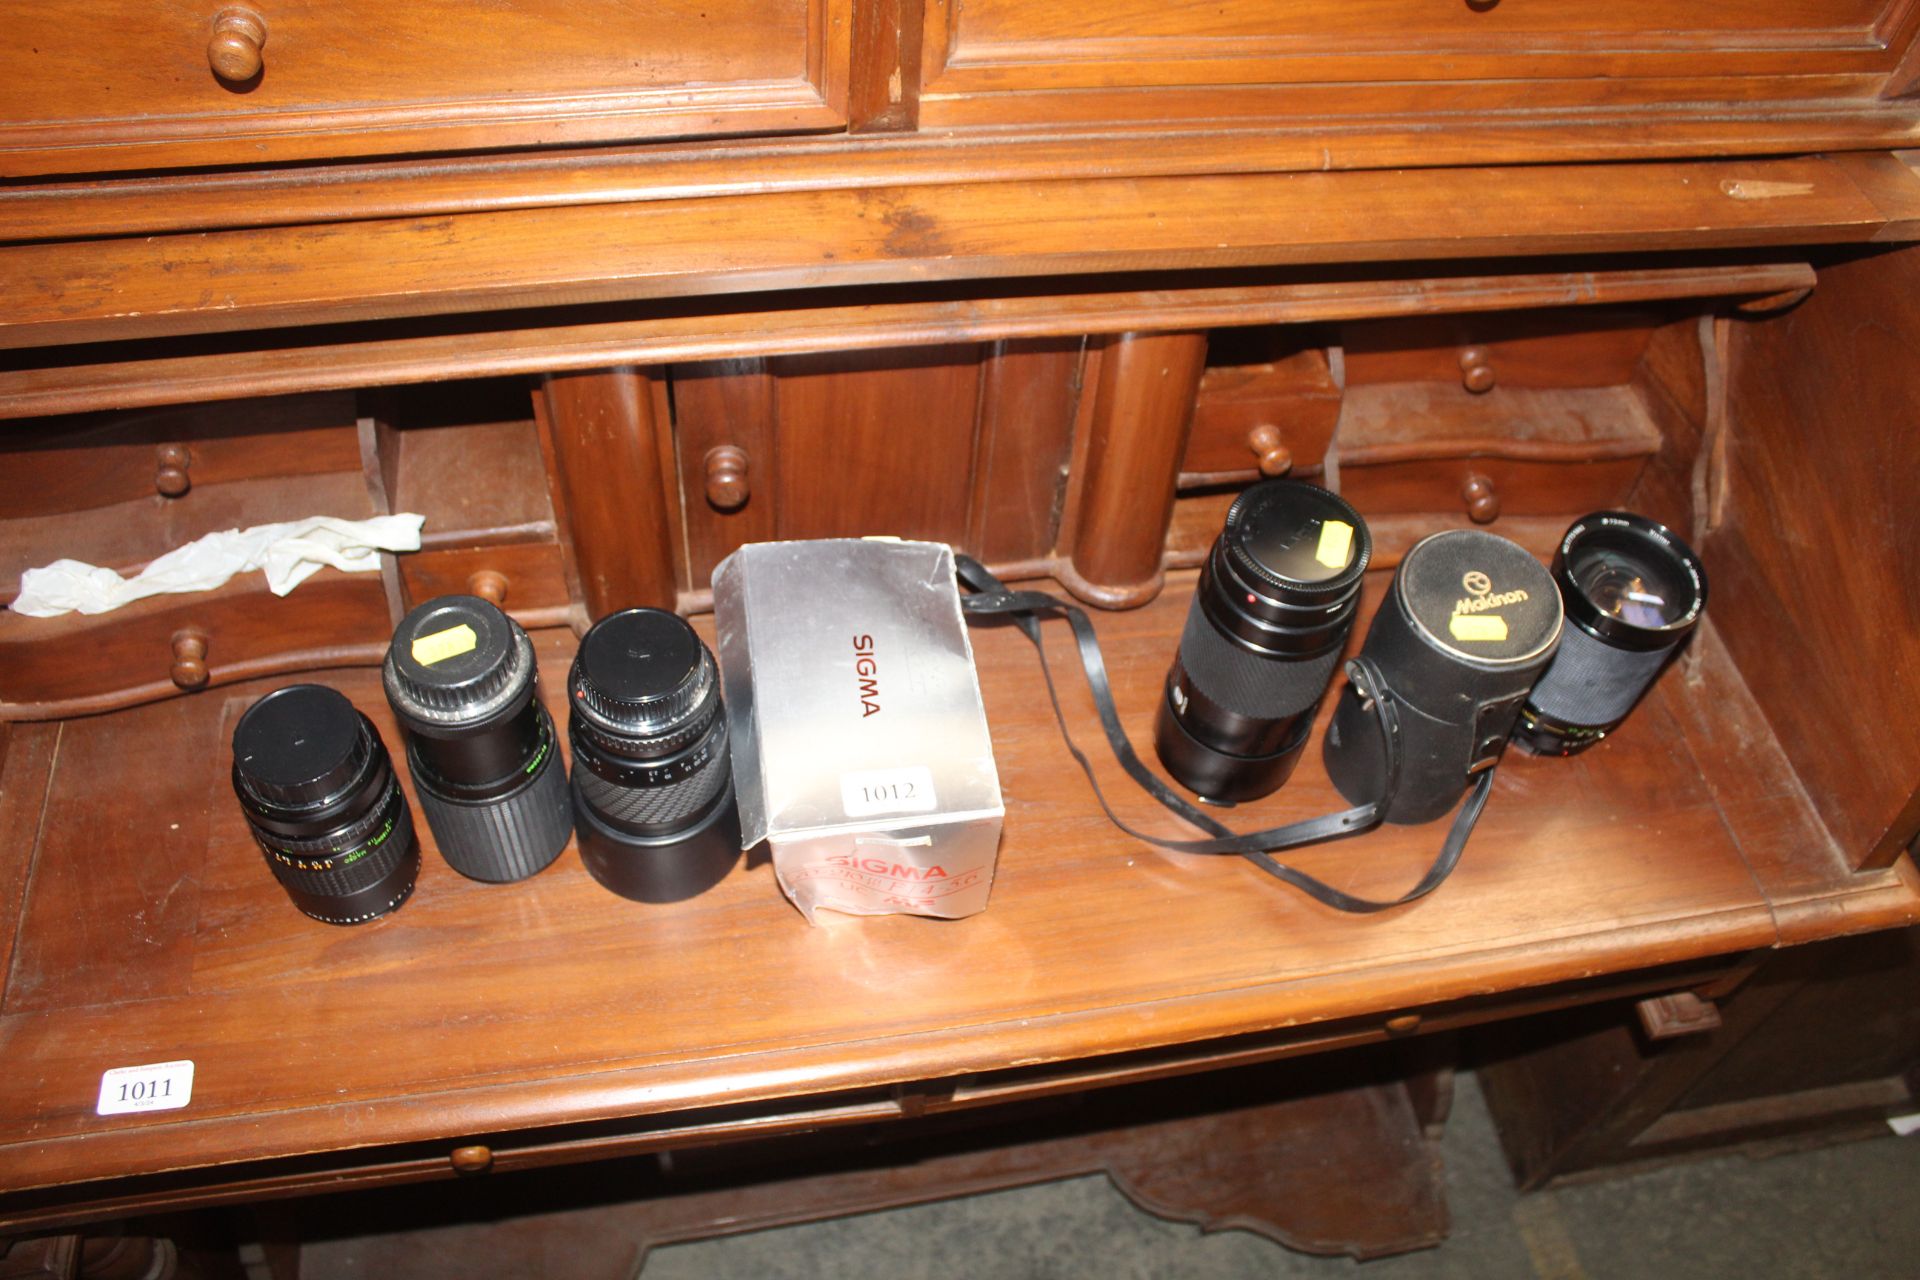 A quantity of camera lenses to include Sigma, Mino